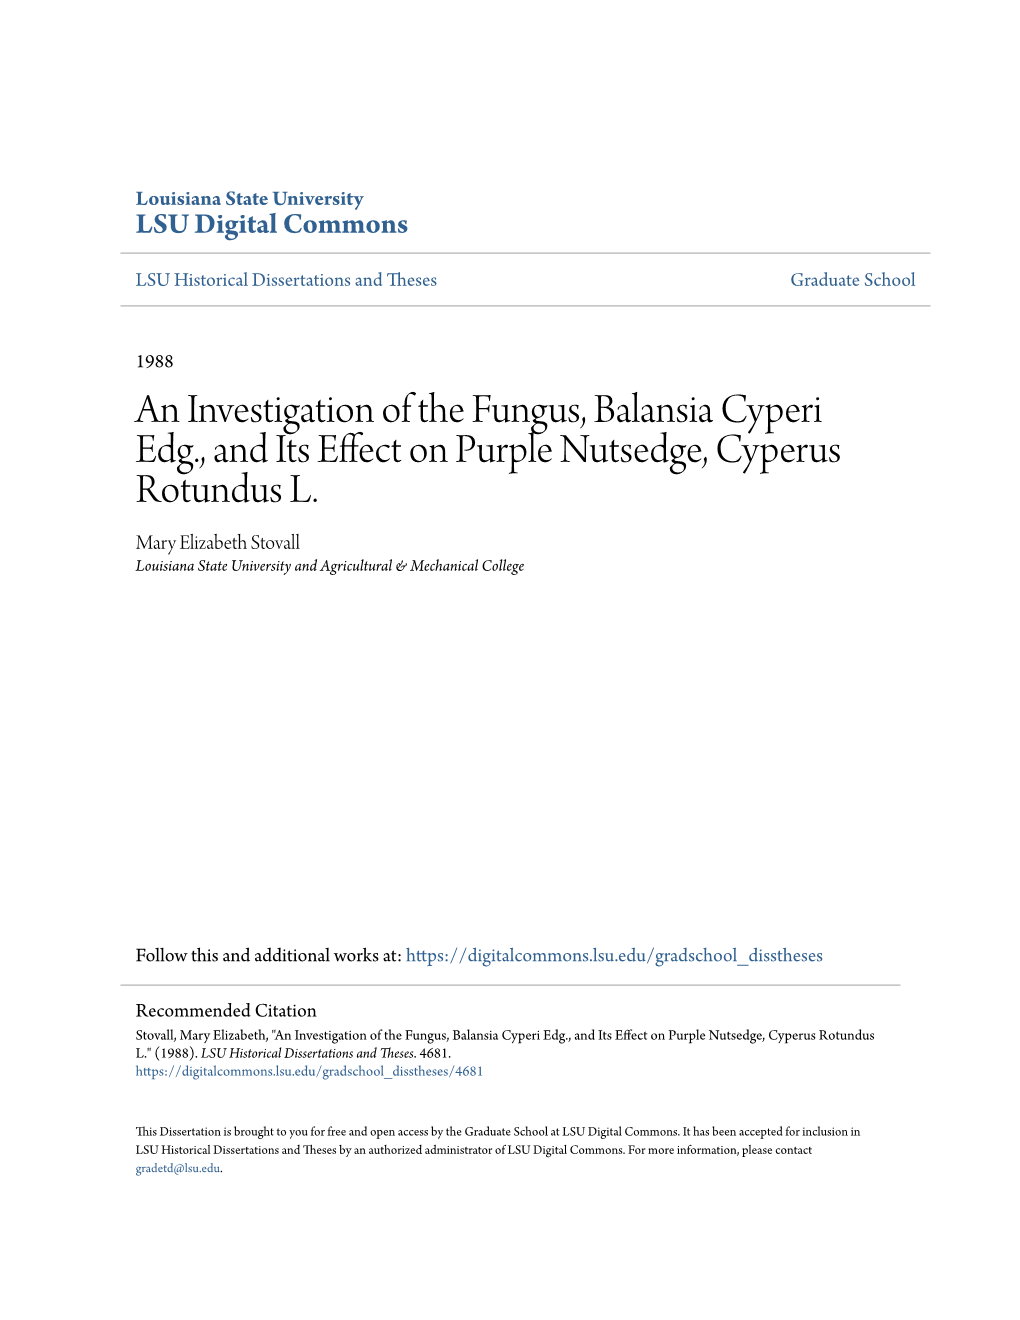 An Investigation of the Fungus, Balansia Cyperi Edg., and Its Effect on Purple Nutsedge, Cyperus Rotundus L